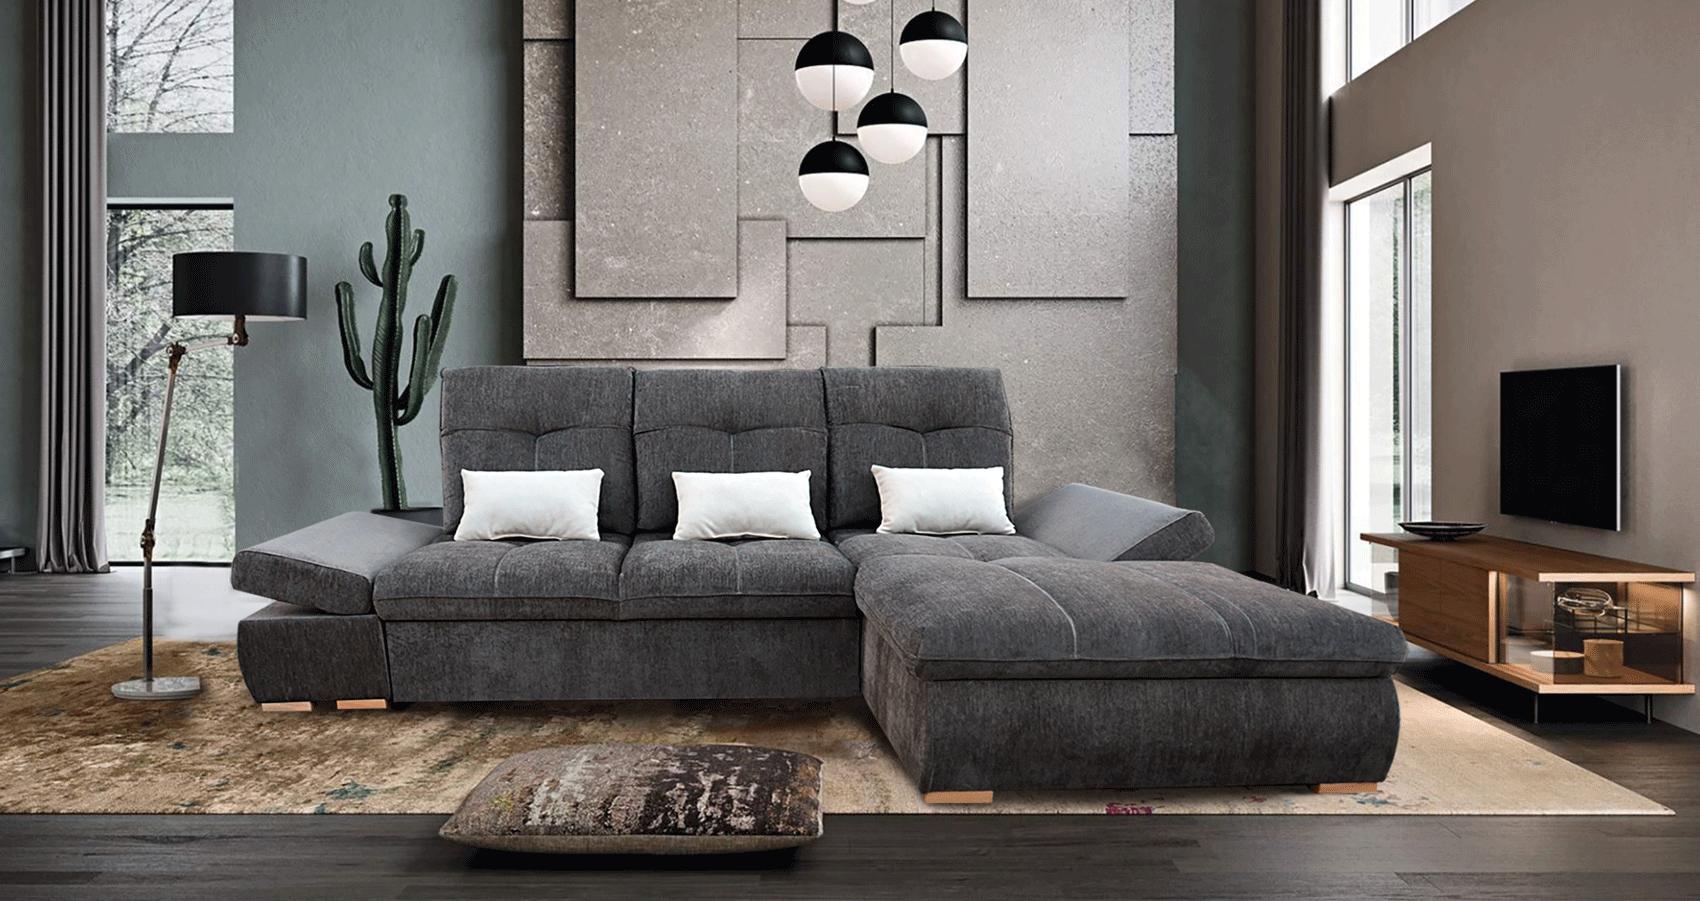 Contemporary, Modern Sectional Sofa Bed ESTERO ESTERO in Slate gray Fabric